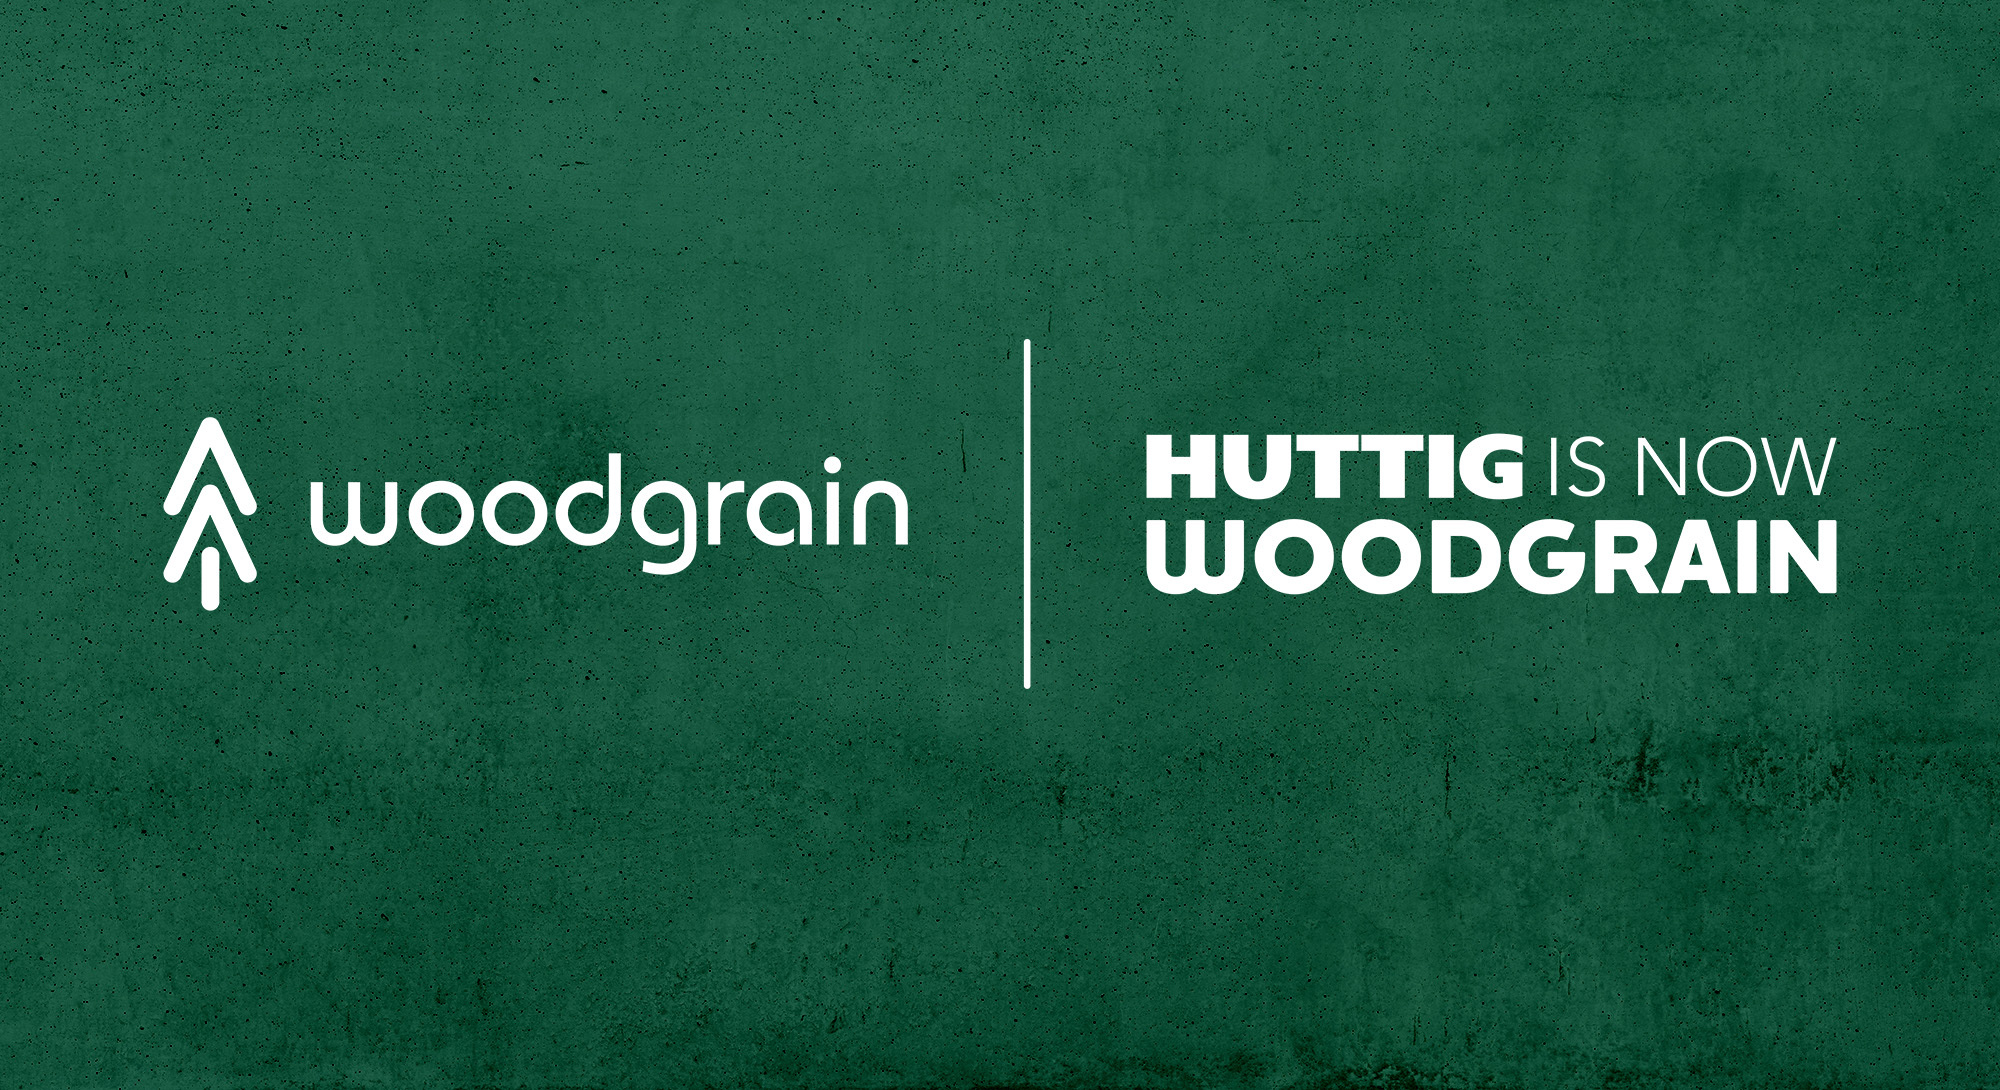 Huttig is now Woodgrain image